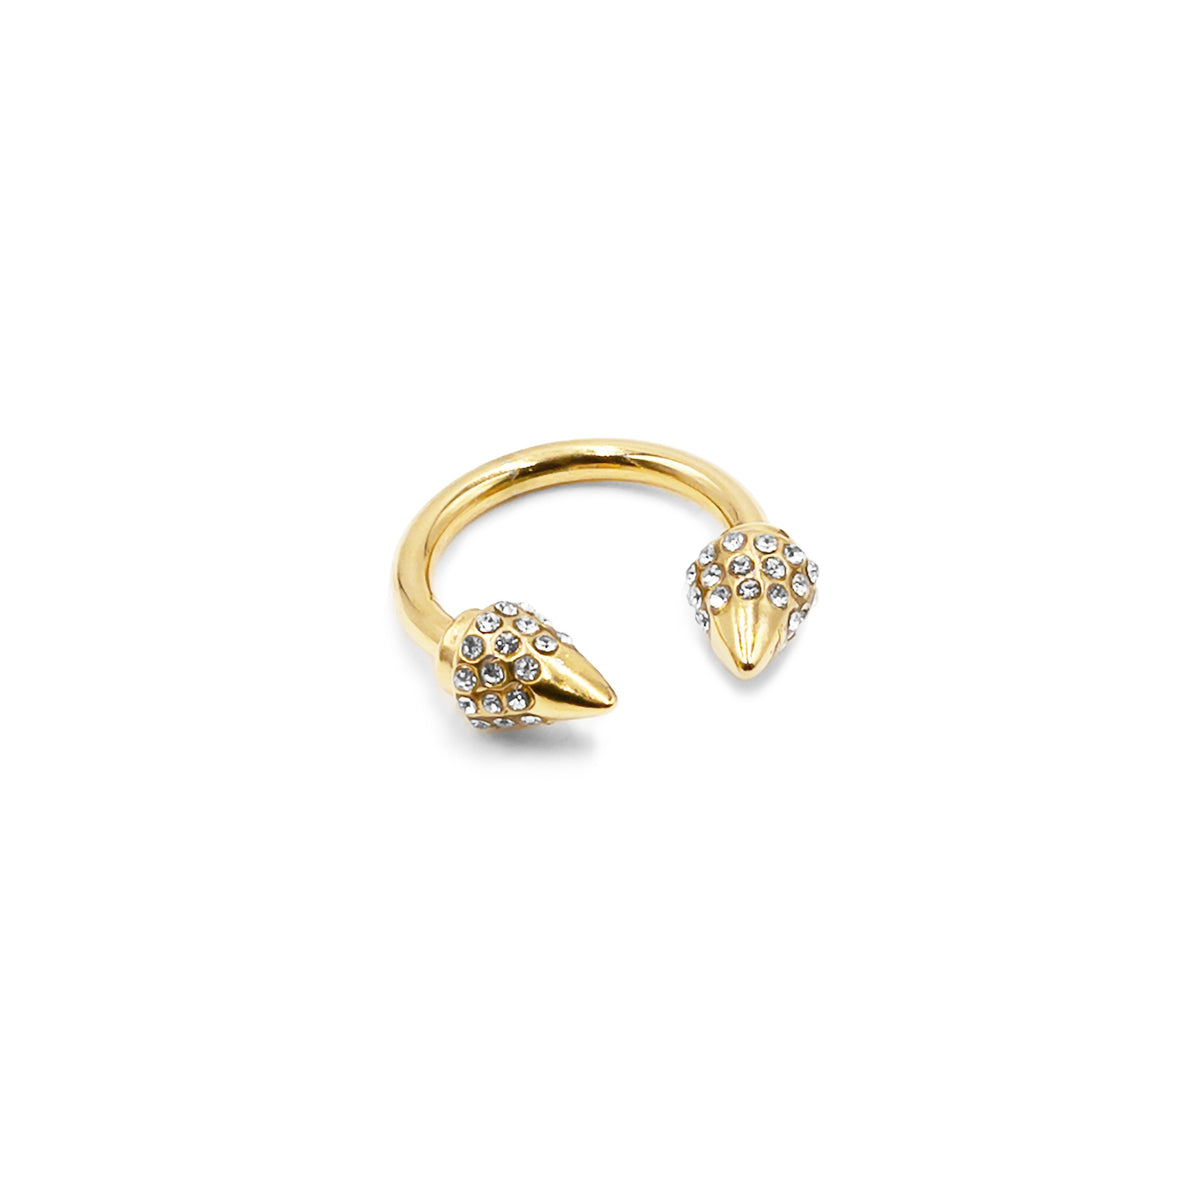 Colección Spike - Gold Bling Ring joyería fina de diseño para hombres y mujeres